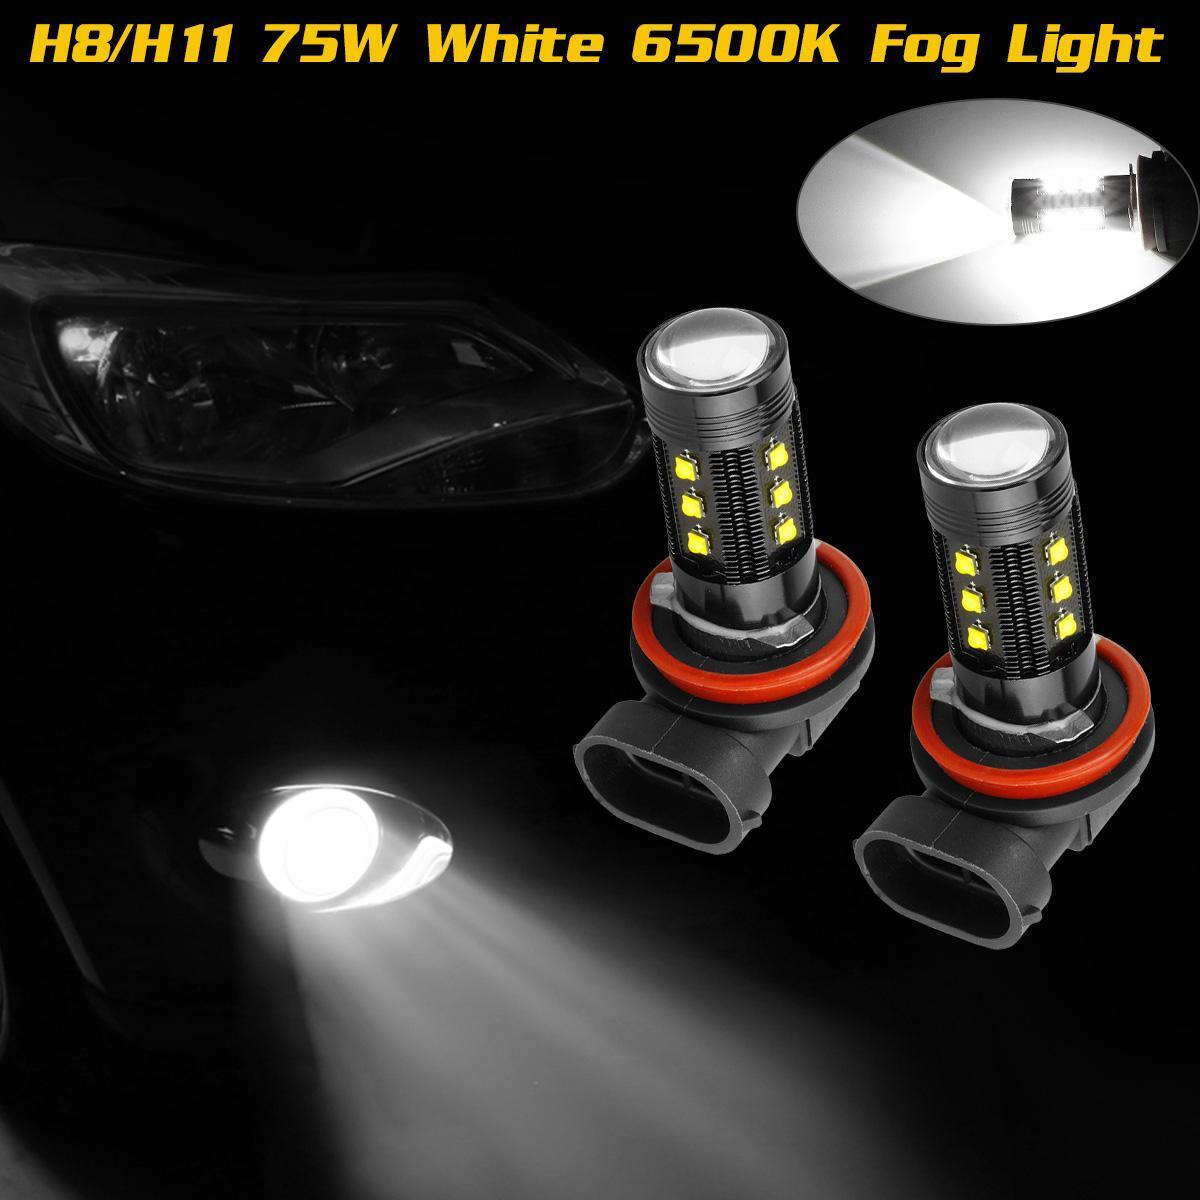 2X 75W H8 H11 Cree XBD Car Vehicle LED Day Driving Fog Light Bulb Lamp White